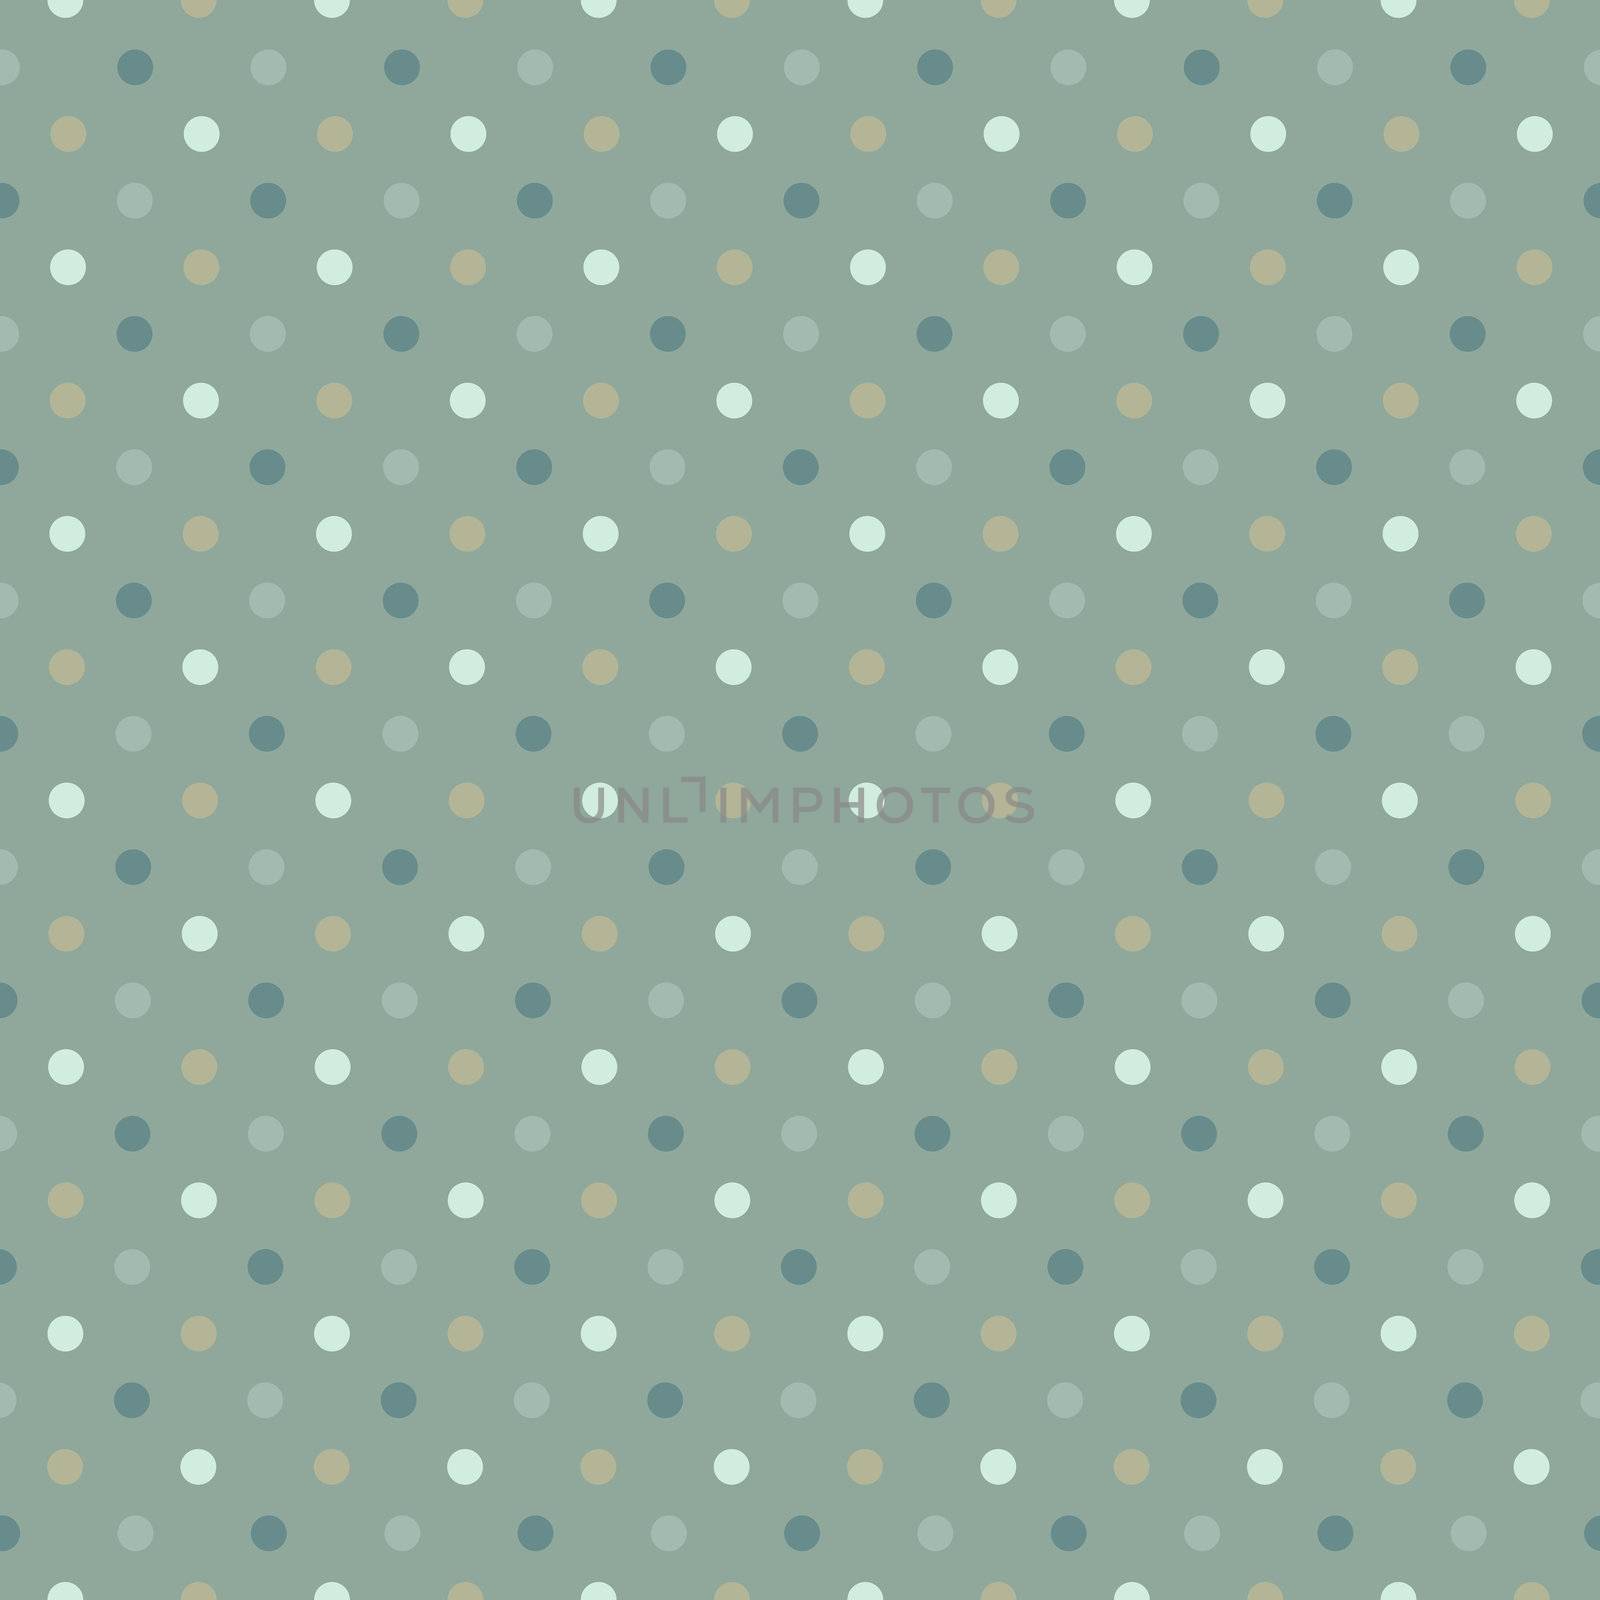 Seamless polka dot pattern in cold green gamut. Vector illustrat by pashabo